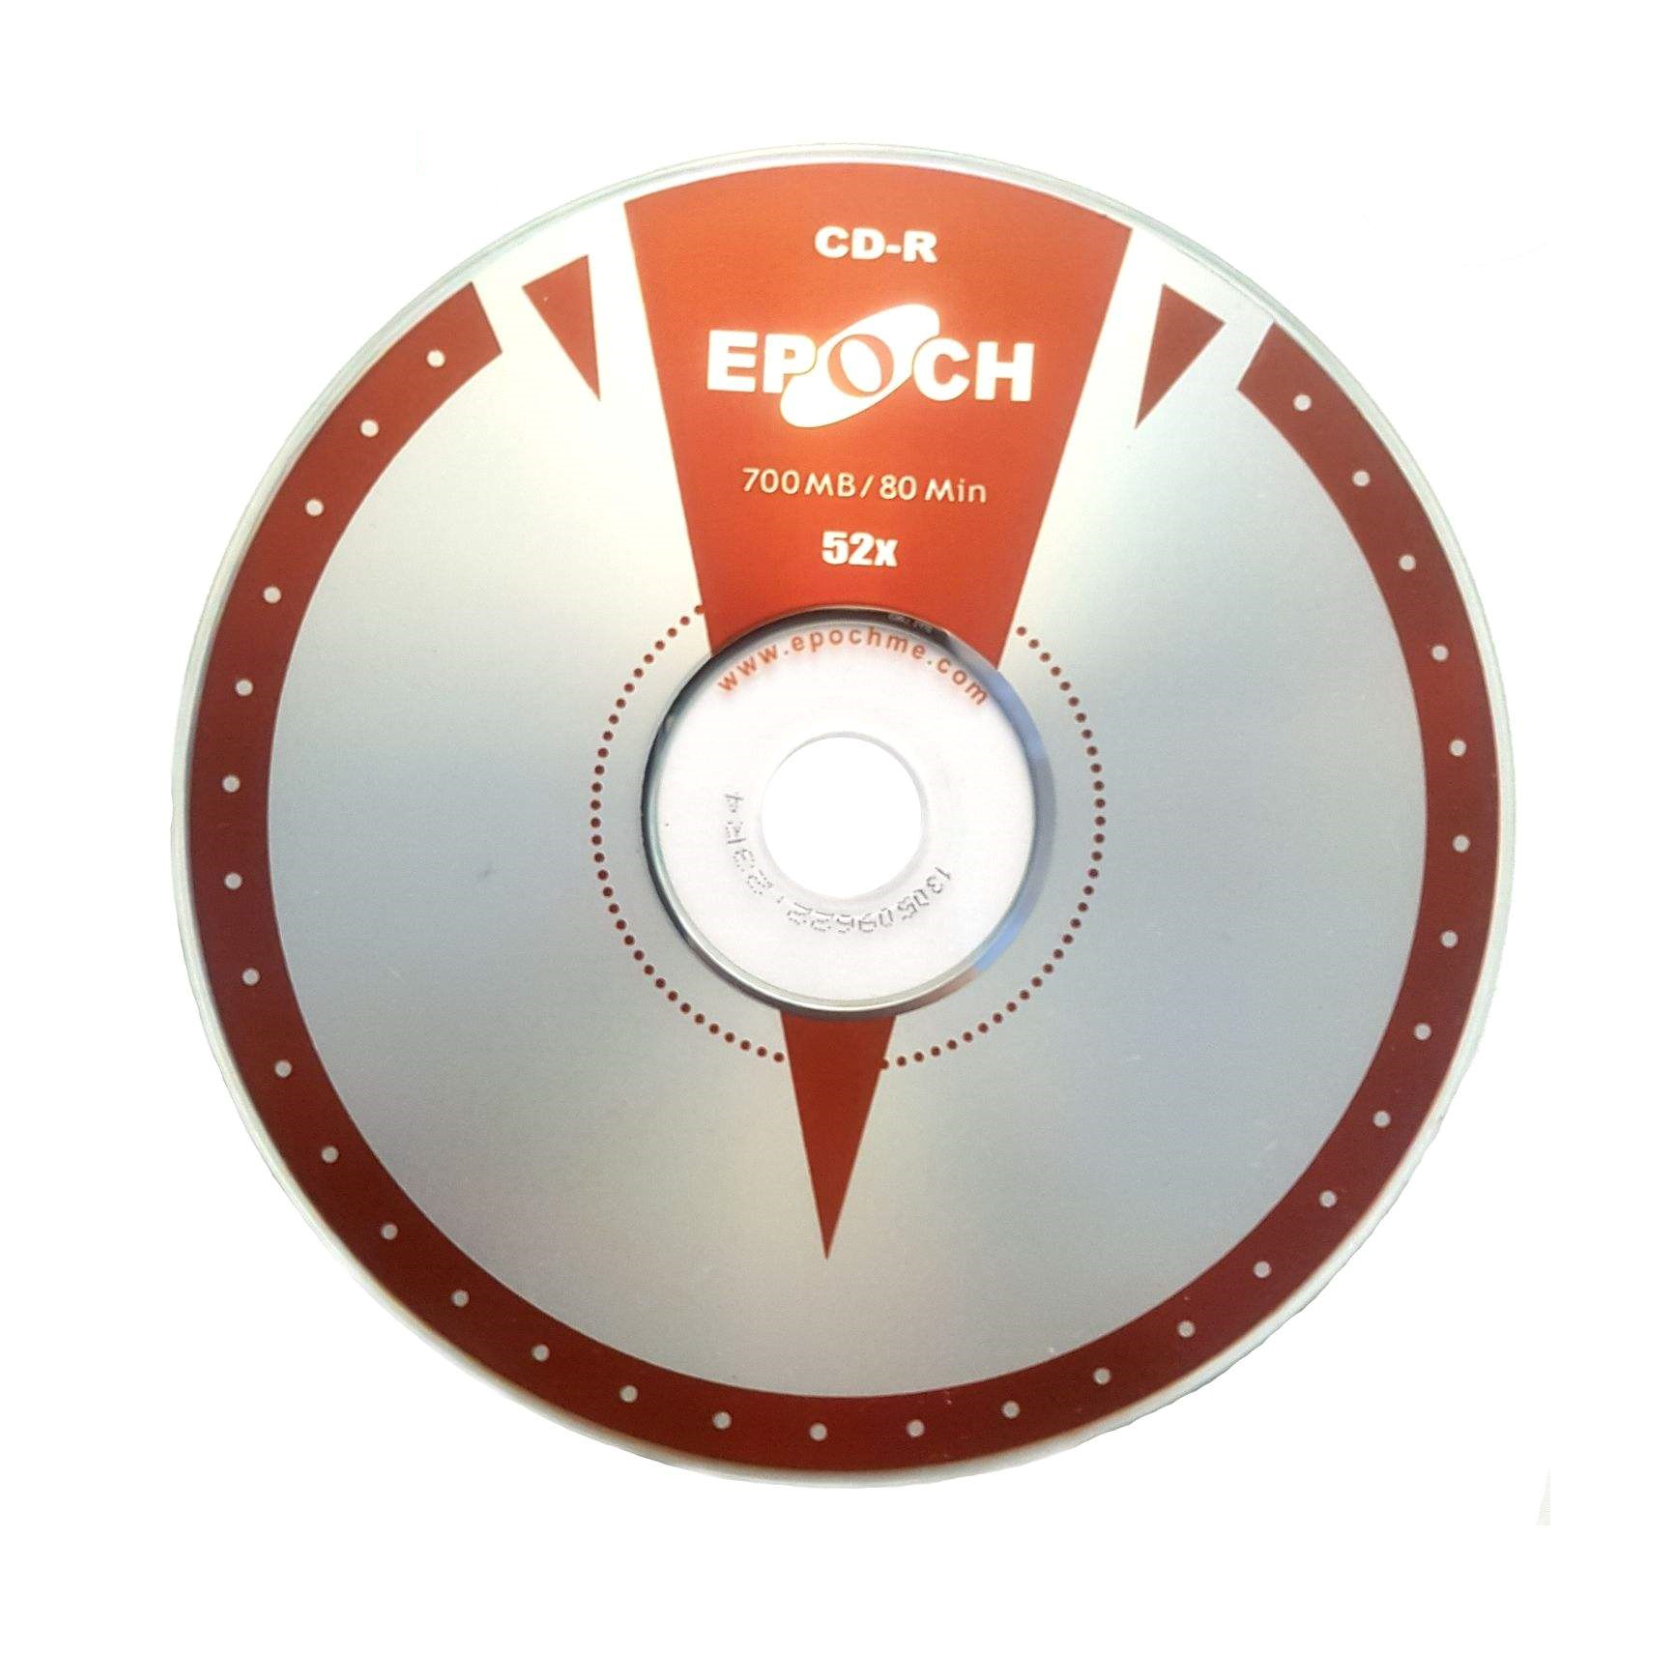 سی دی خام اپوچ مدل EP1